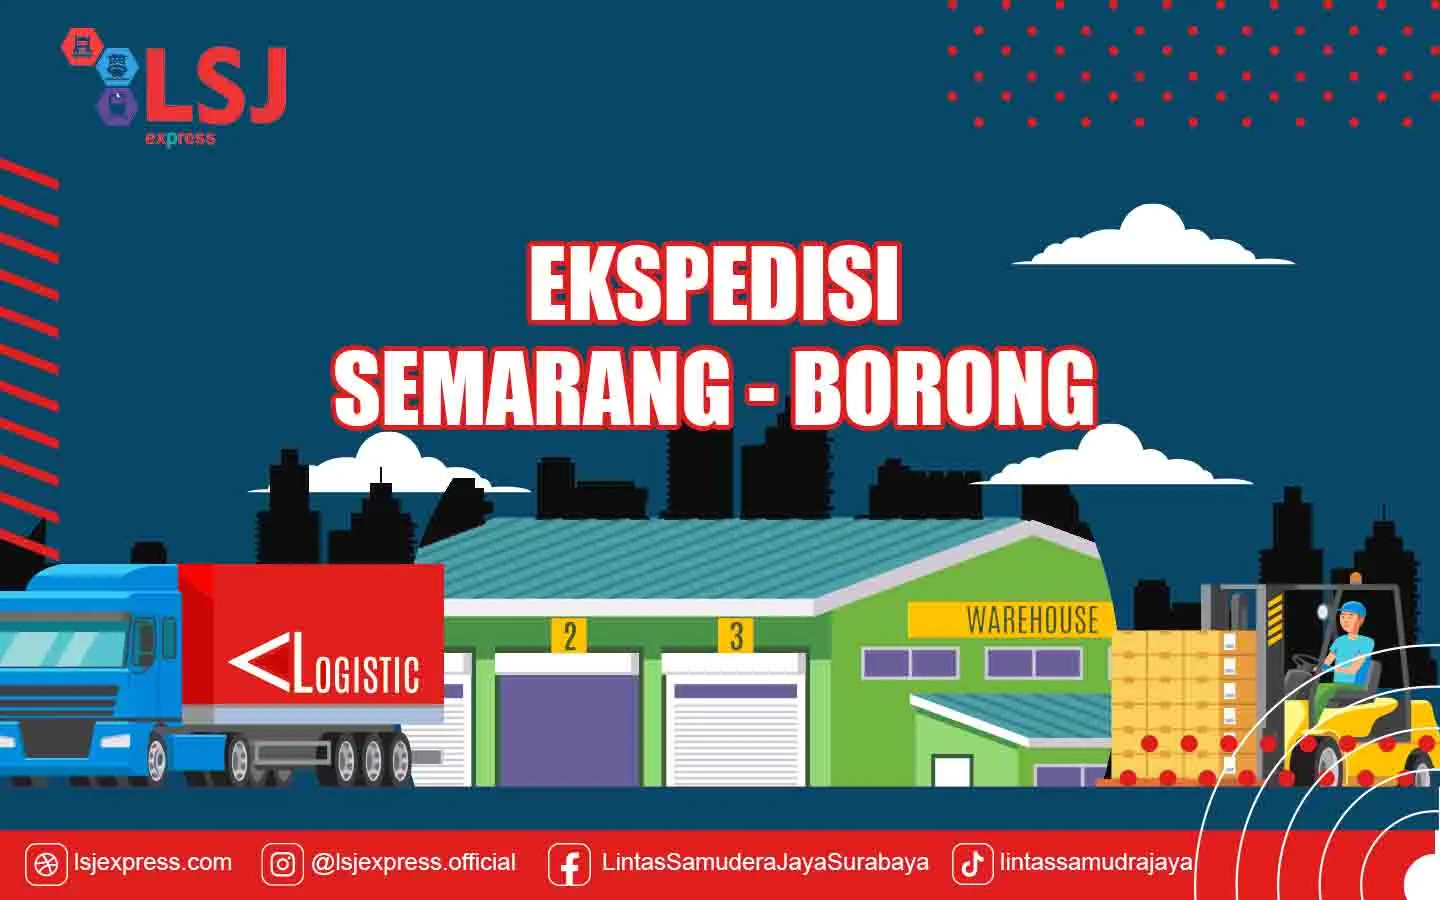 Ekspedisi Semarang Borong